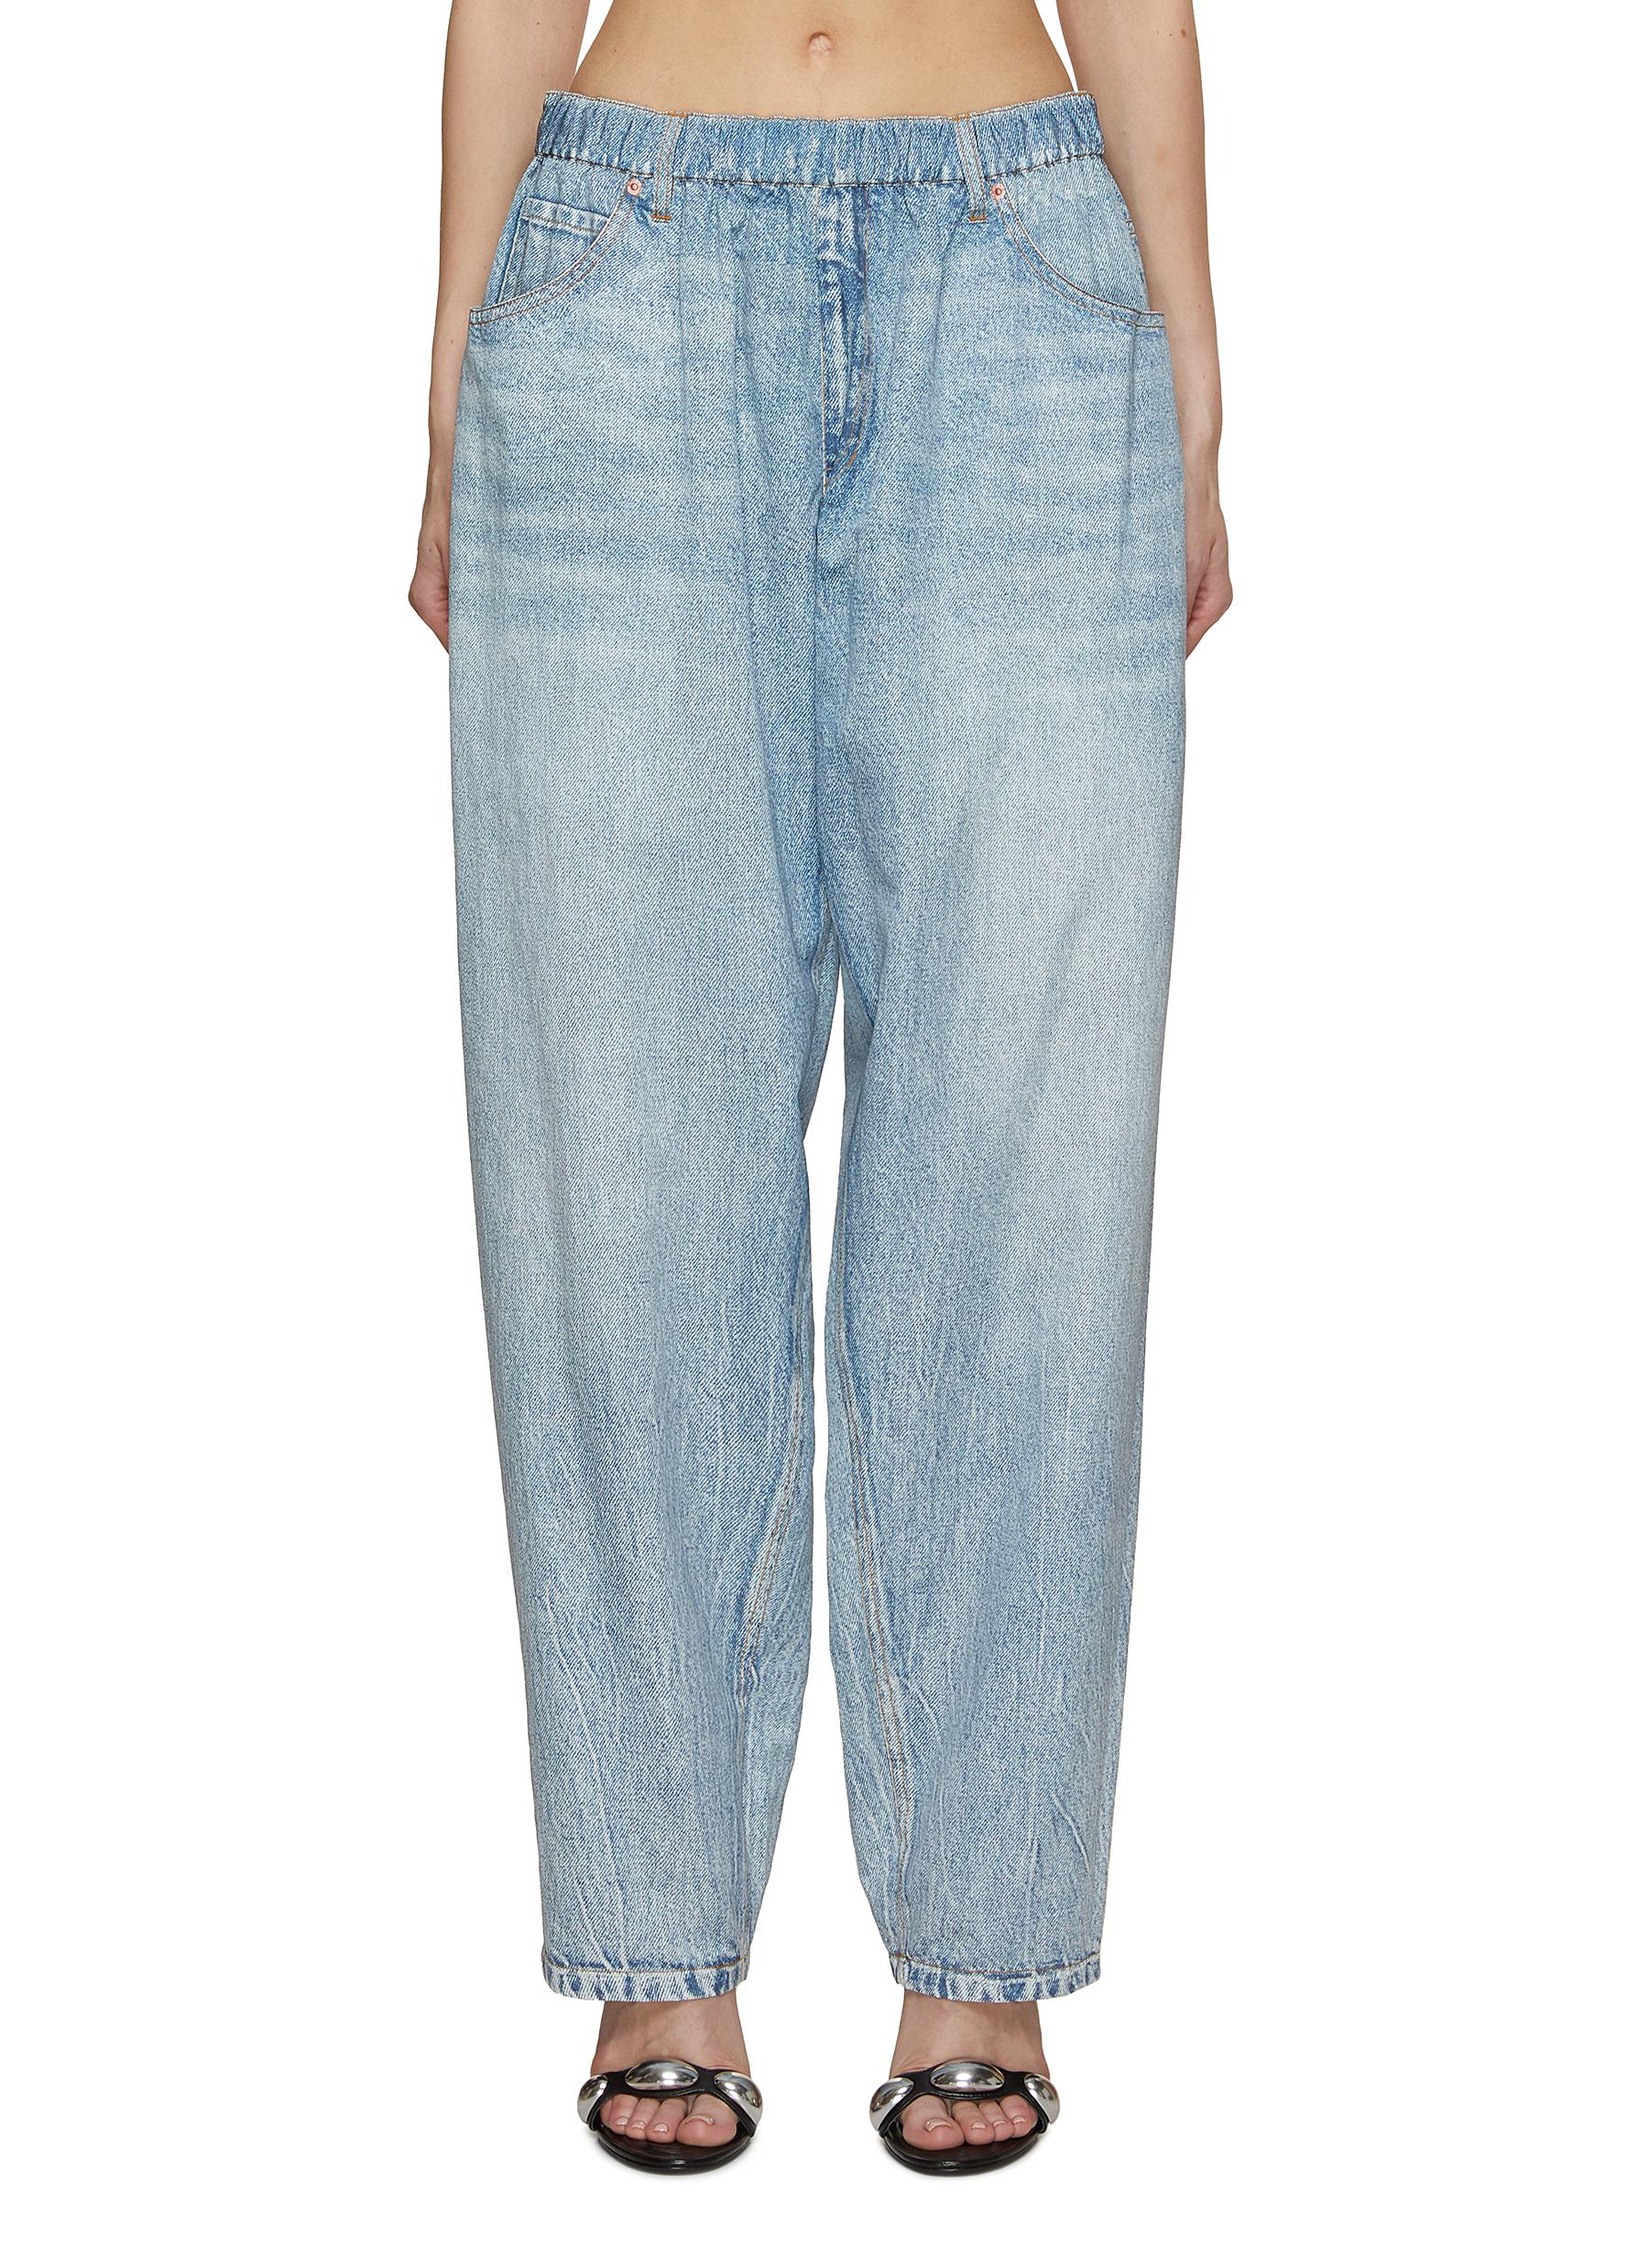 Suzie Kondi Beach Velour Brown Track Pants Women Size Small Oversized  Sweatpants | eBay